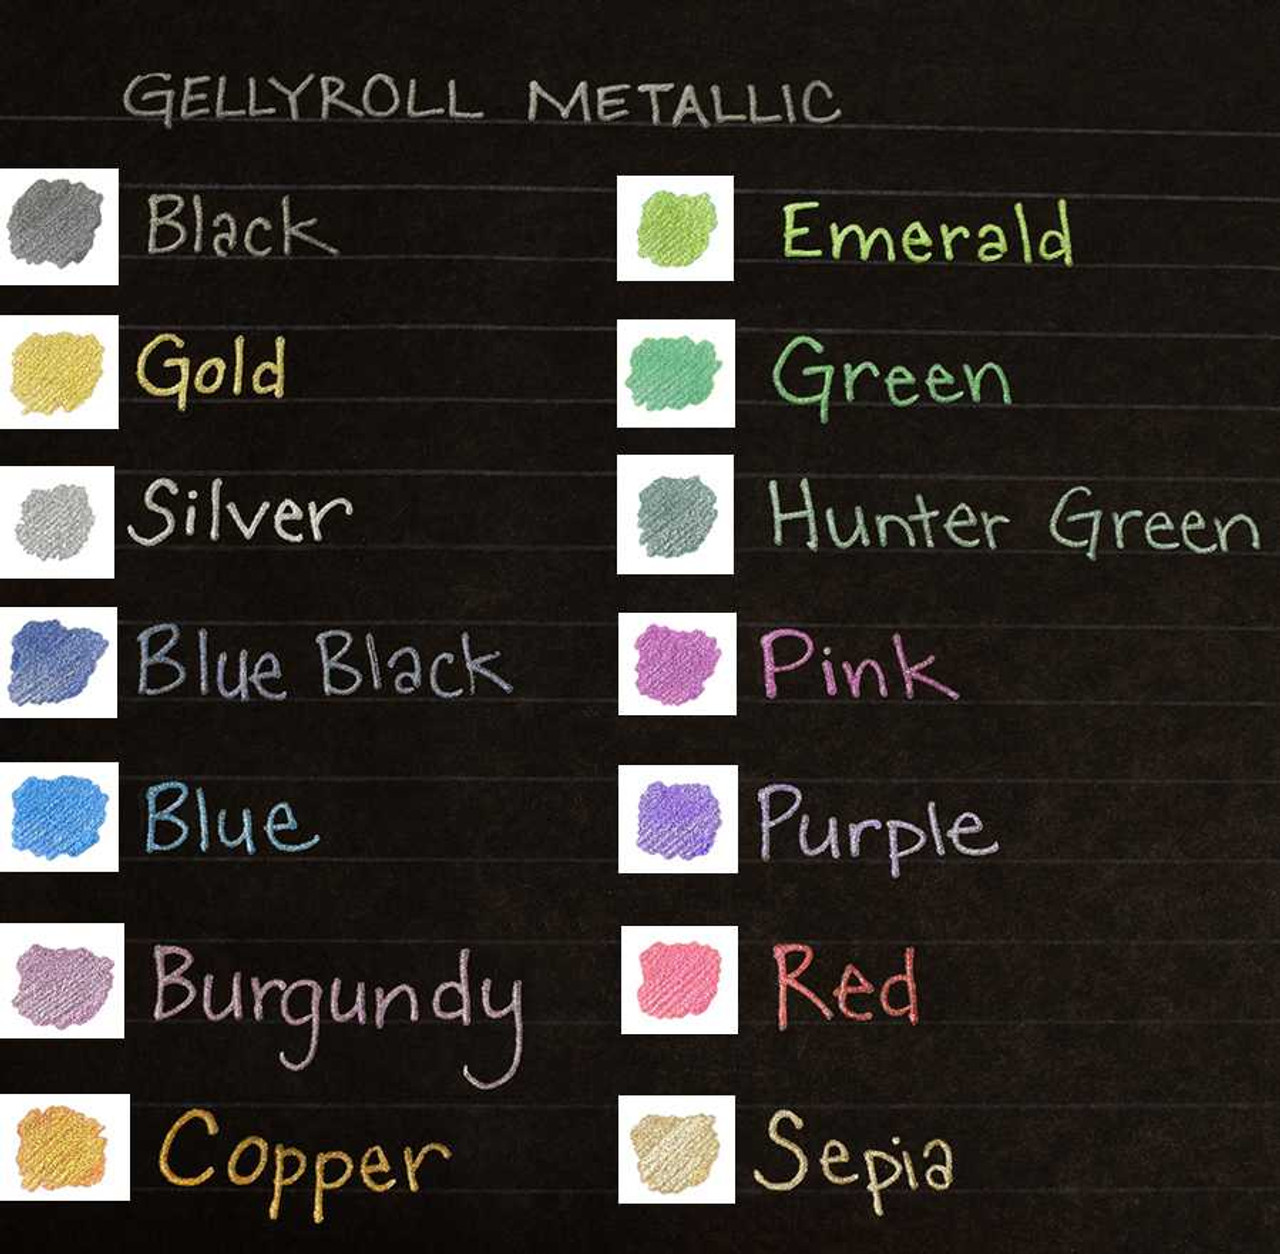 Gelly Roll Metallic Pen - The Imagination Spot